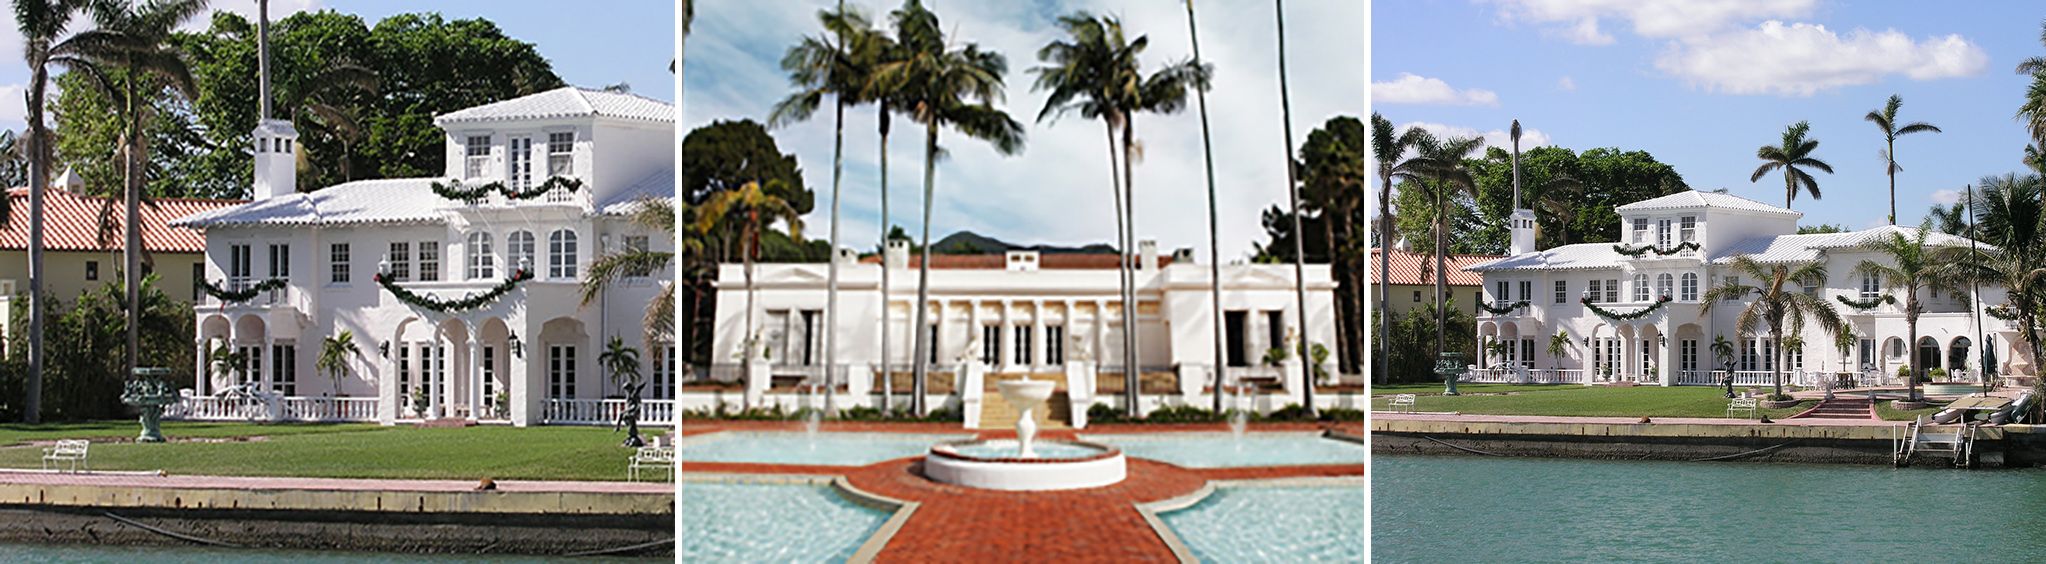 Scarface mansion